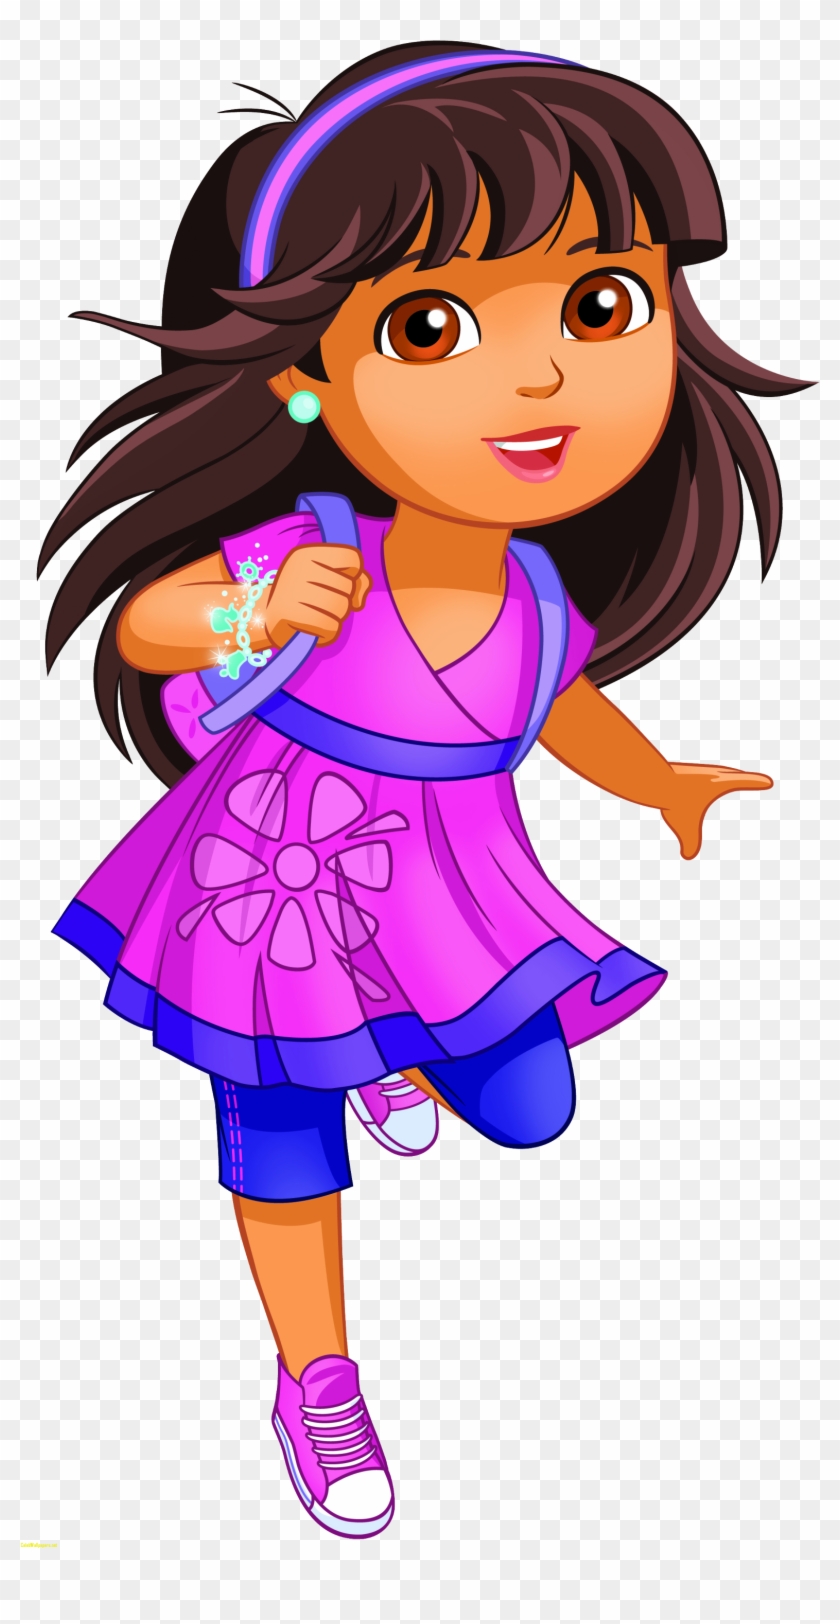 Dora Images Dora Clipart Free Download Clip Art Free - Dora And Friends Into The City #186971